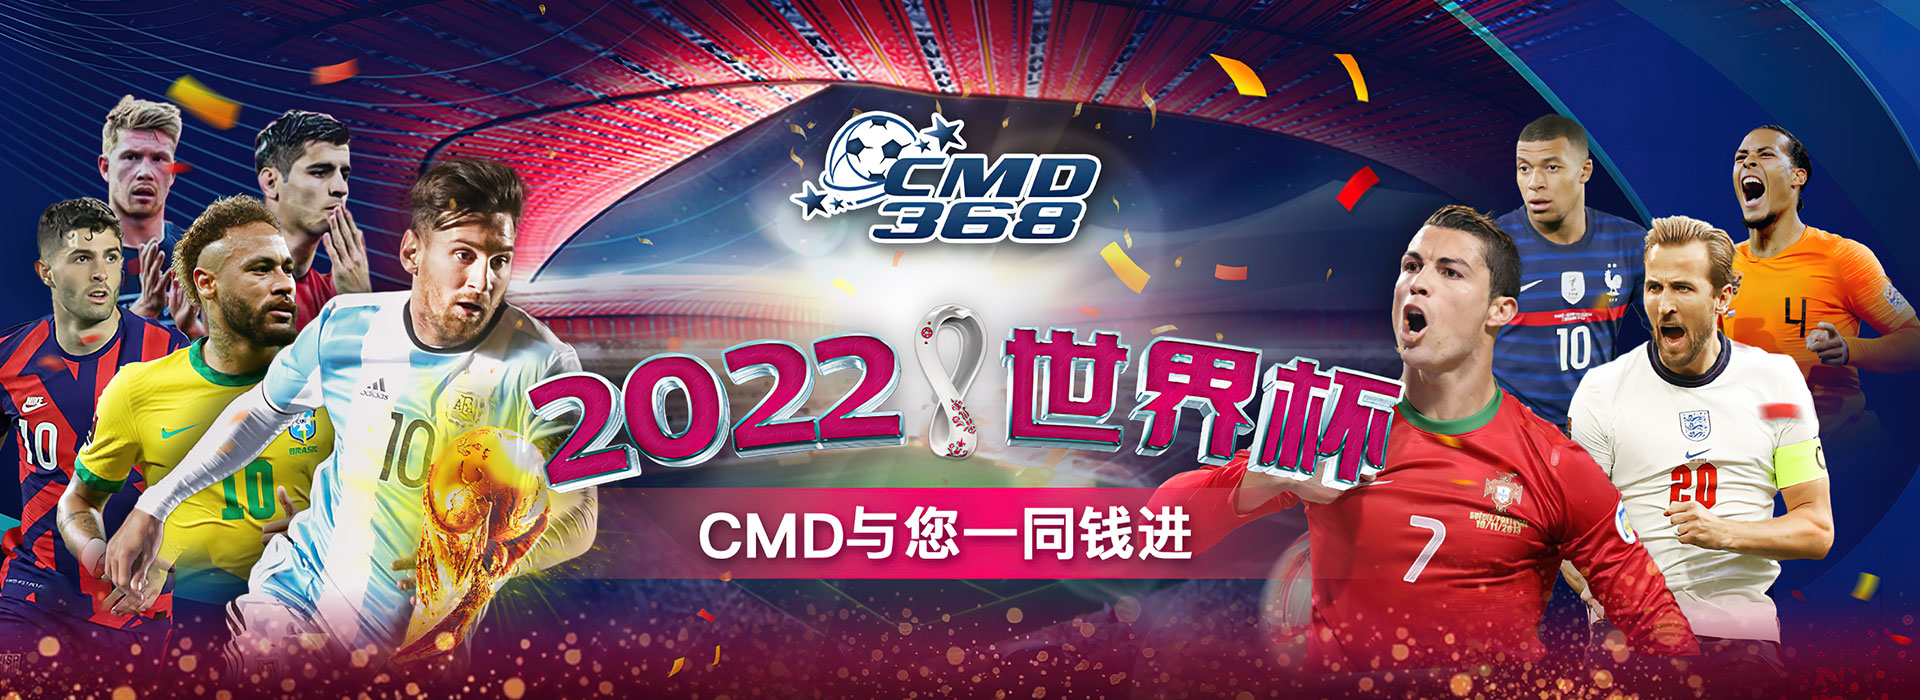 CMD 2022 世界杯 百万奖金等你拿 网页横幅 - 乐游国际GamingSoft